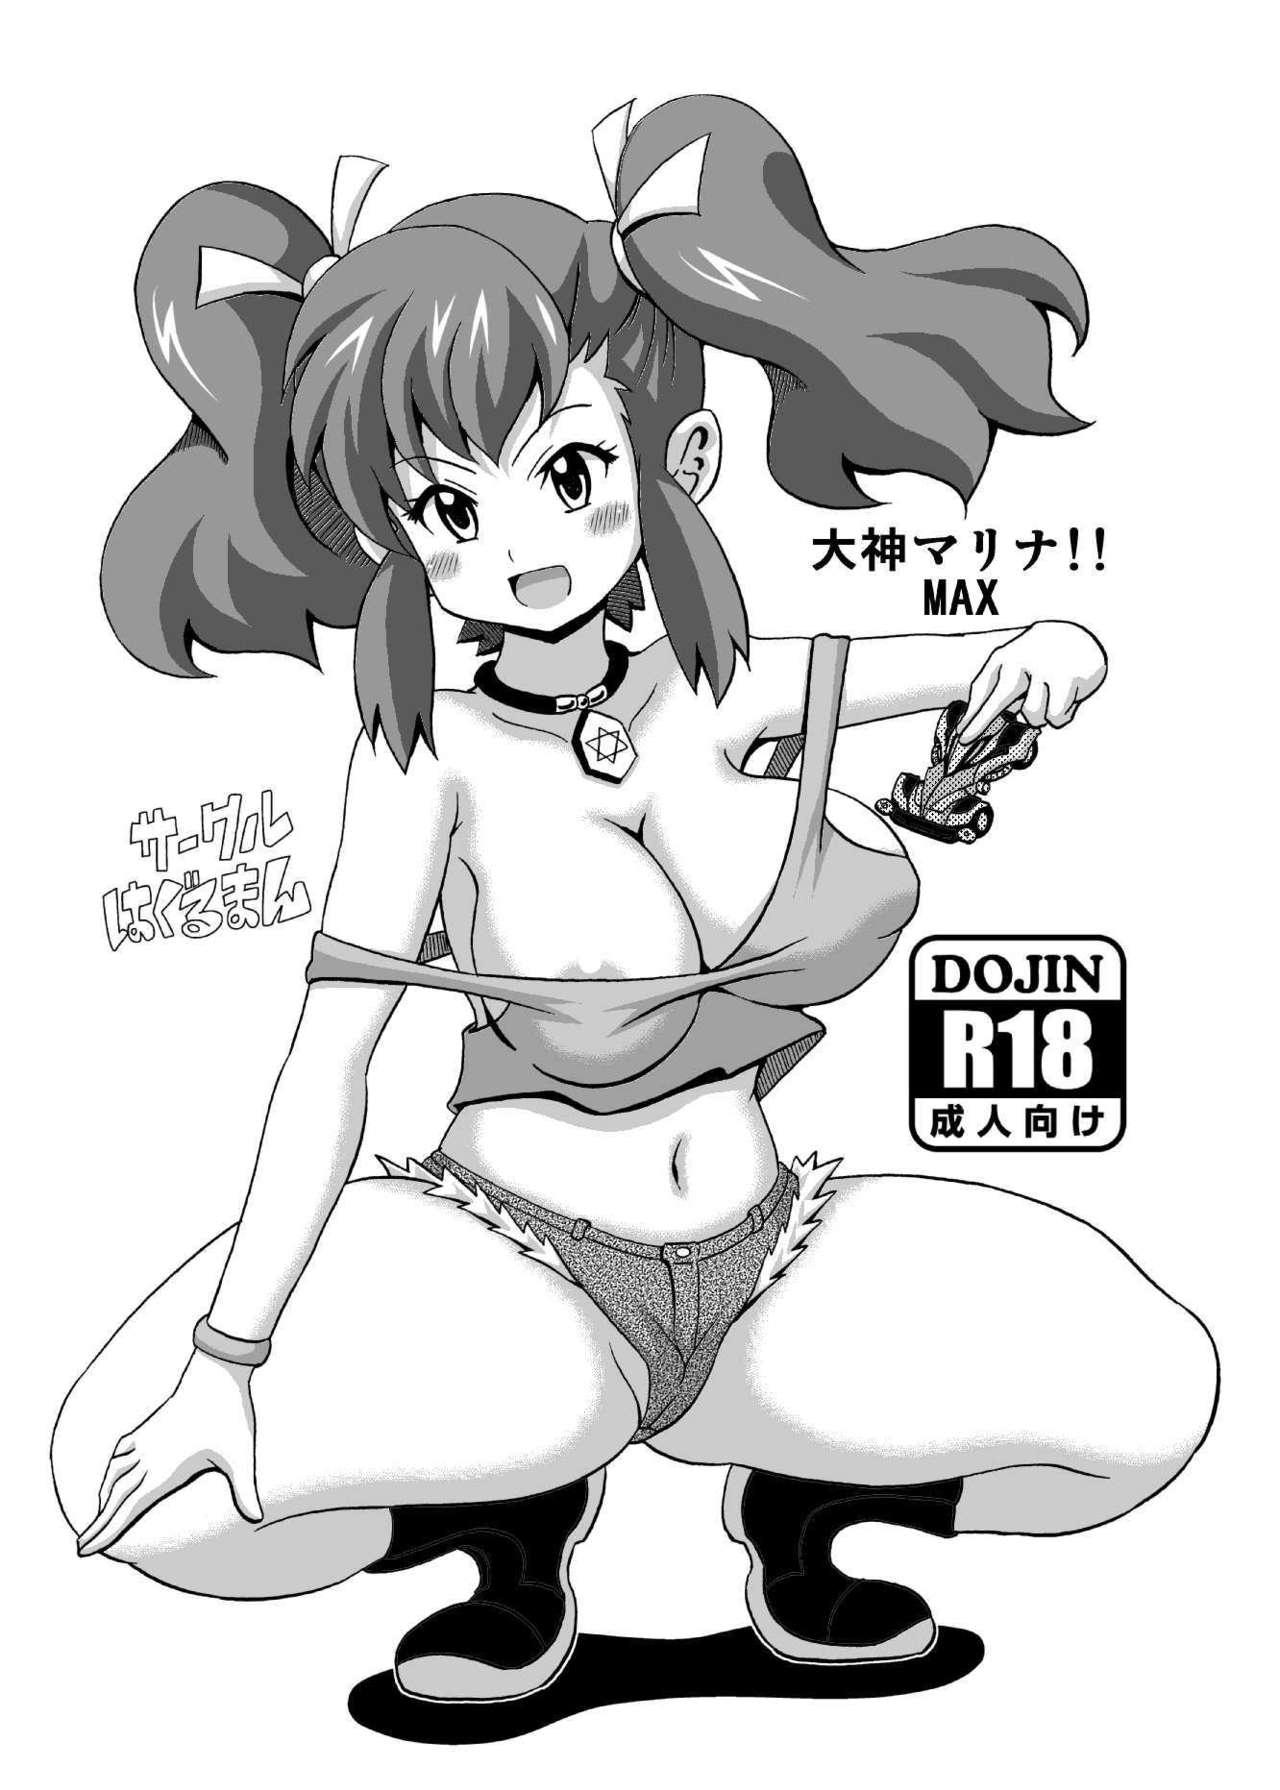 Hardcore Free Porn Ogami Marina!! MAX - Bakusou kyoudai lets and go Lesbian Porn - Picture 1